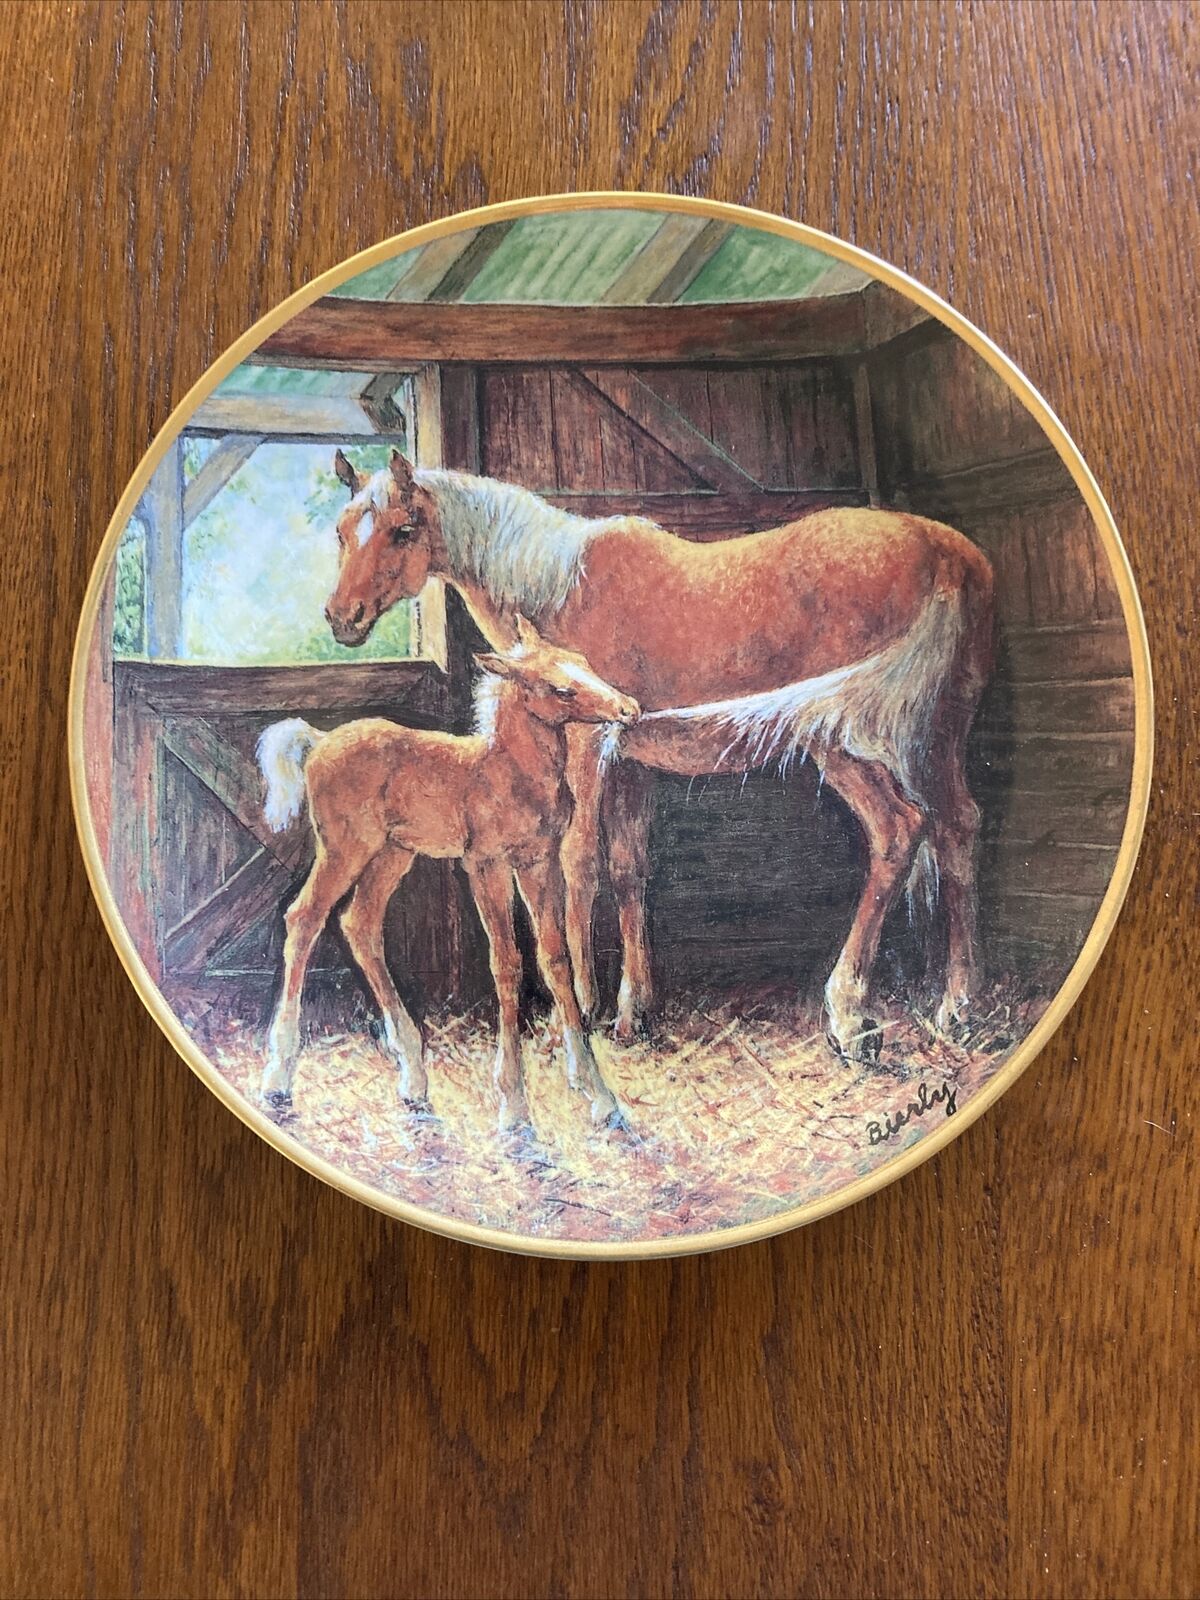 Pony Tales Edward Bierly Limited Edition Plate Franklin Mint